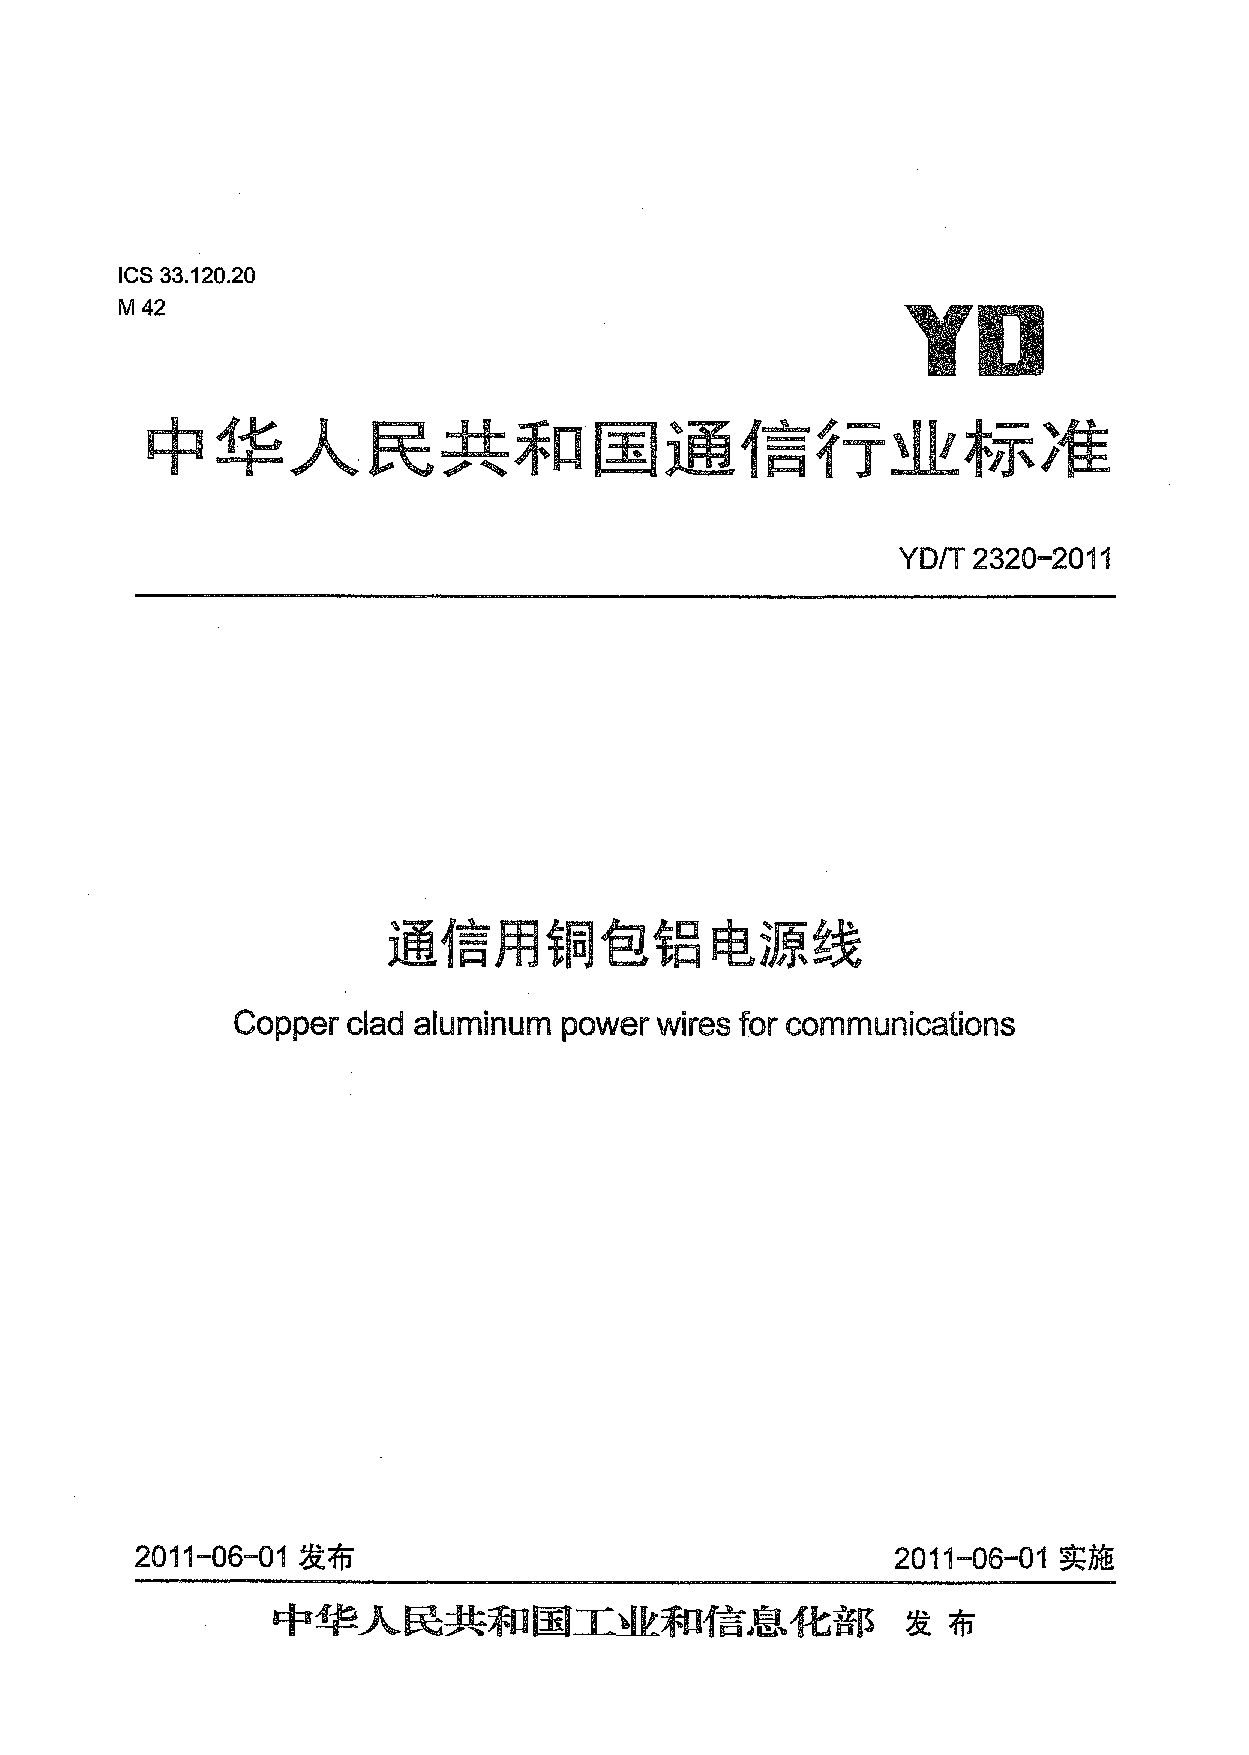 YD/T 2320-2011封面图